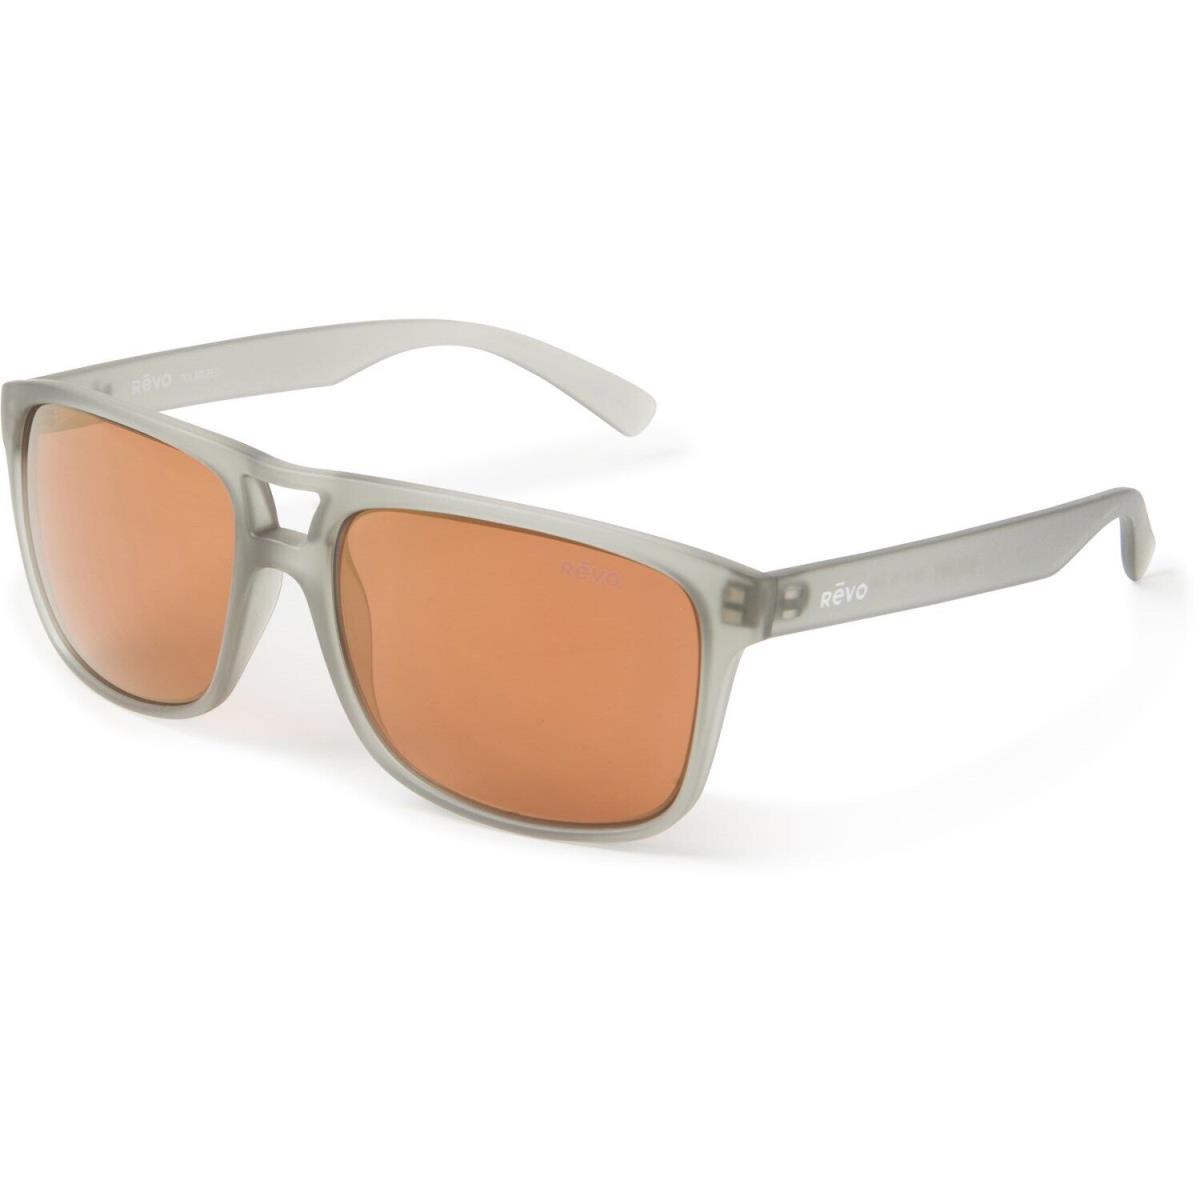 Revo Holsby Polarized Sunglasses - RE 1019